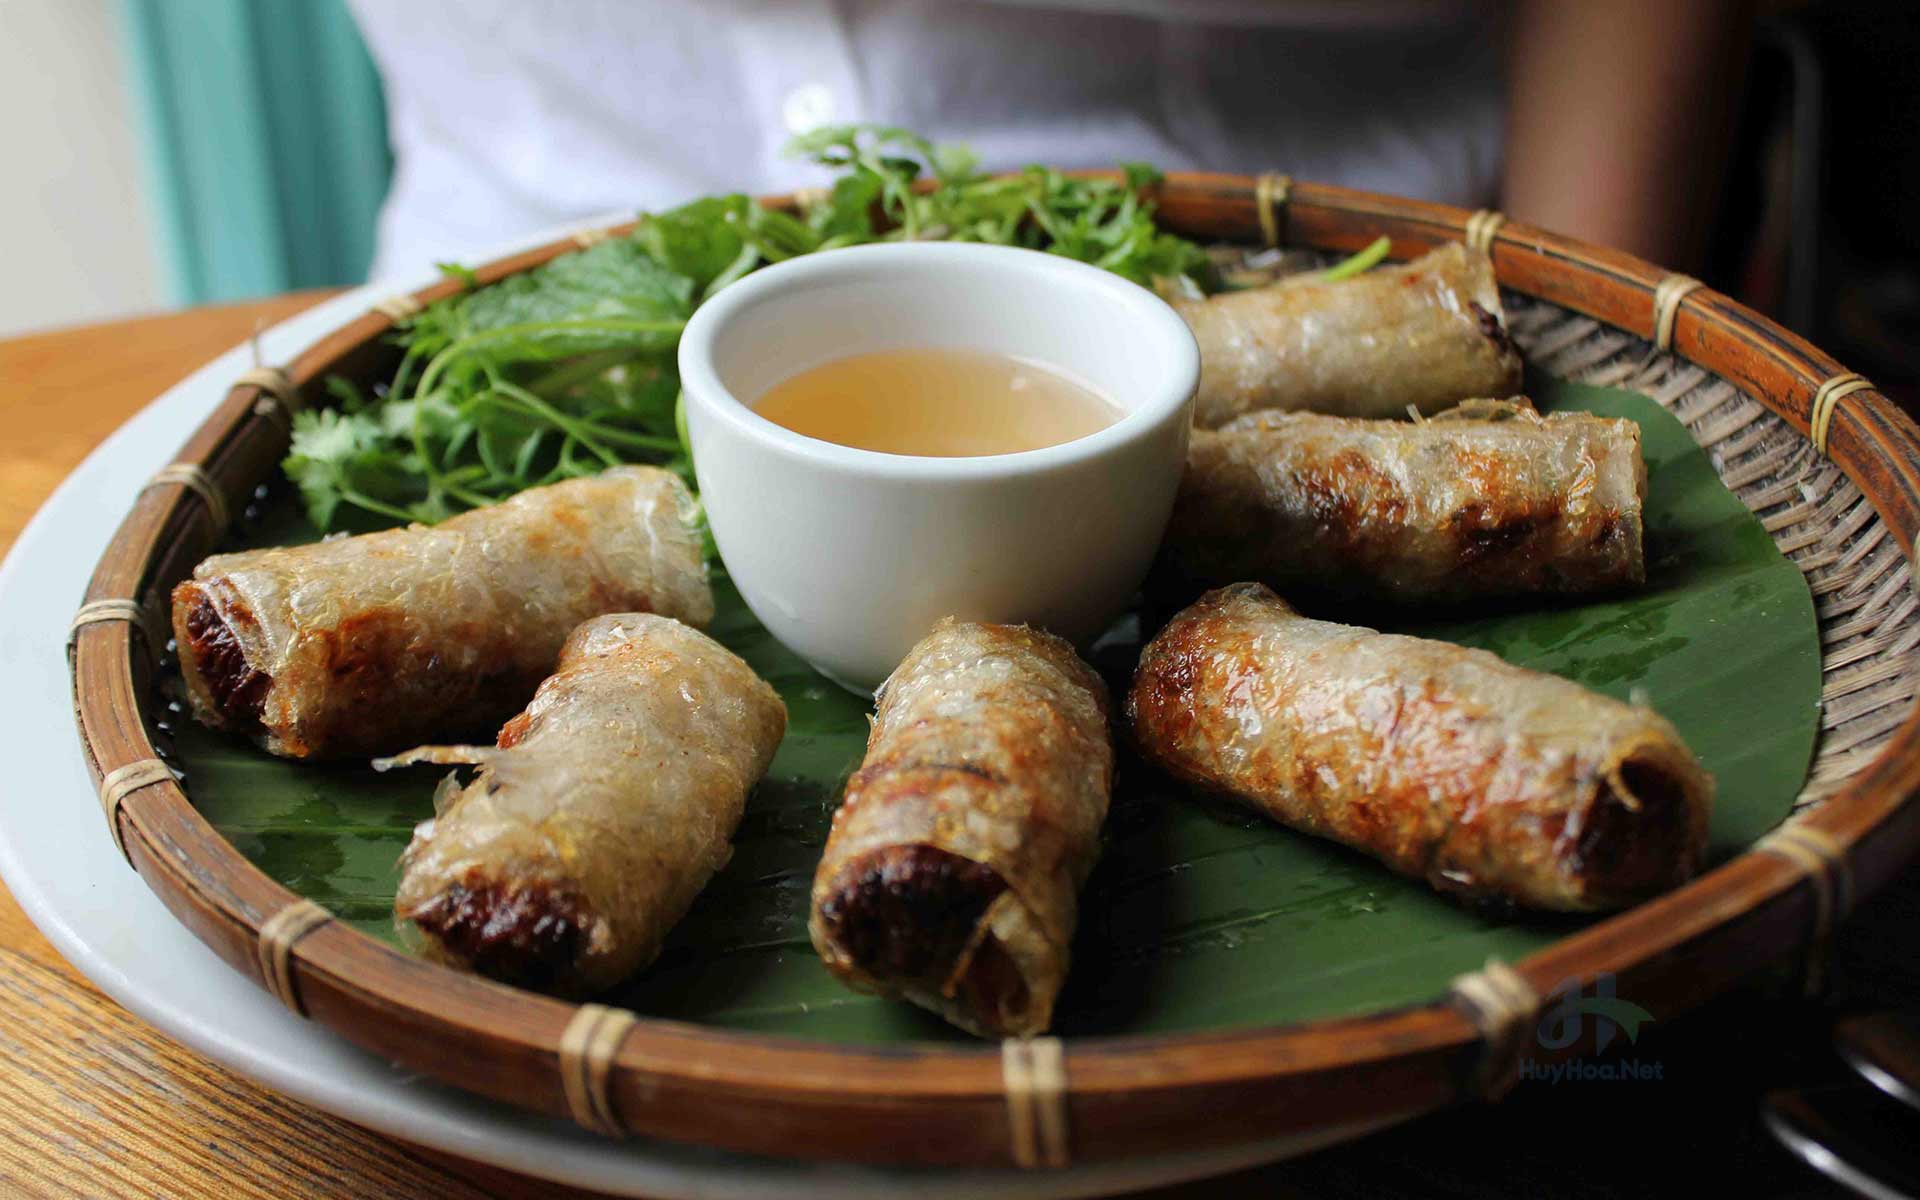 Vietnamese Spring Rolls